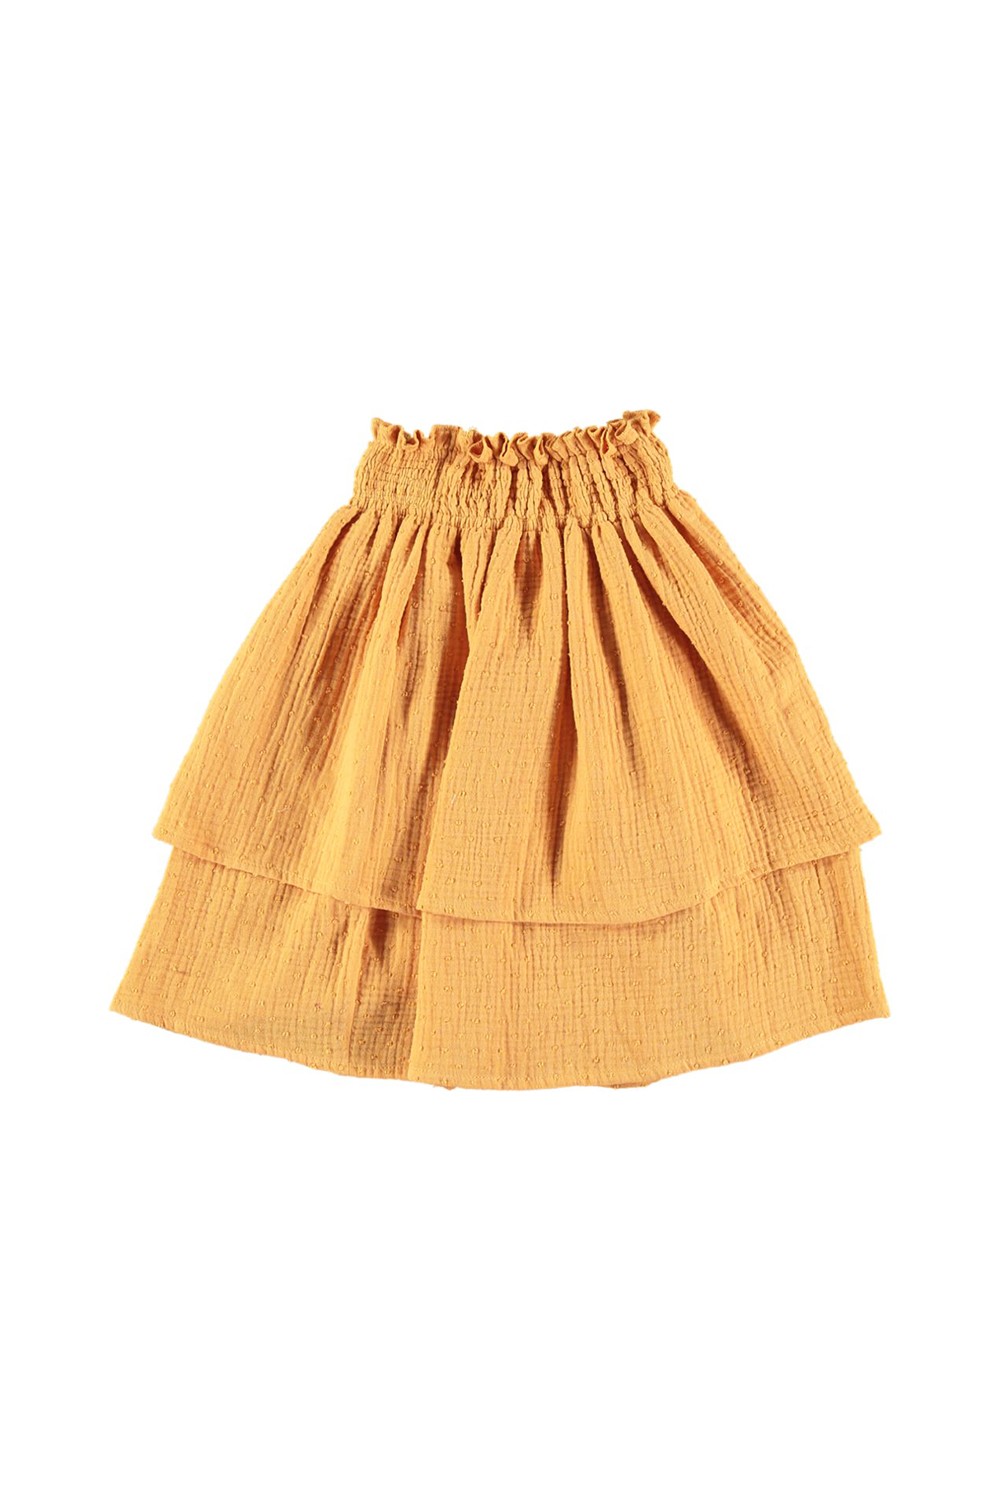 Plume girl skirt orange organic cotton